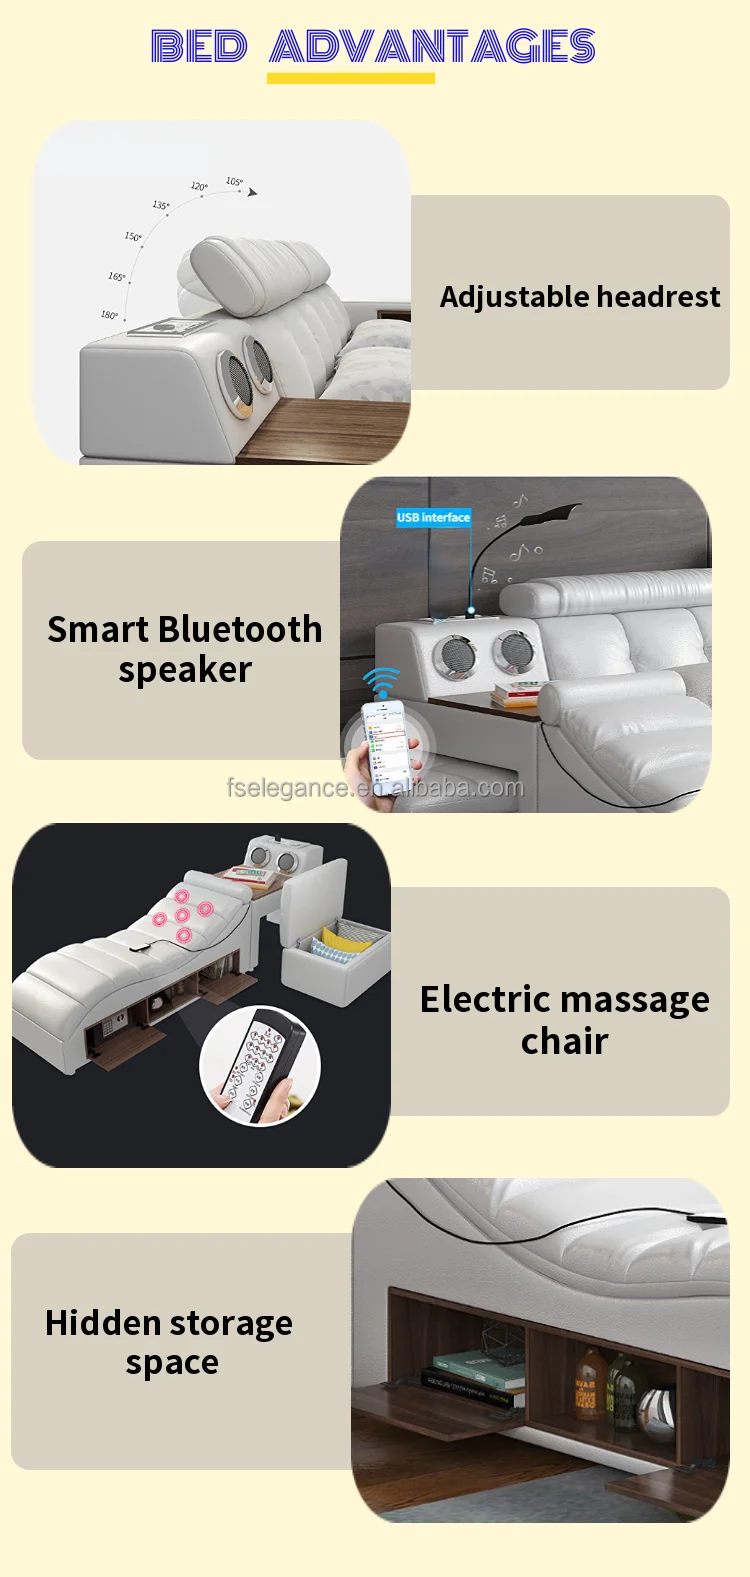 Popular Design Intelligent Multifunctional Luxury Pet Spring space saving wall bed Cardboard Sofa Bed Modern